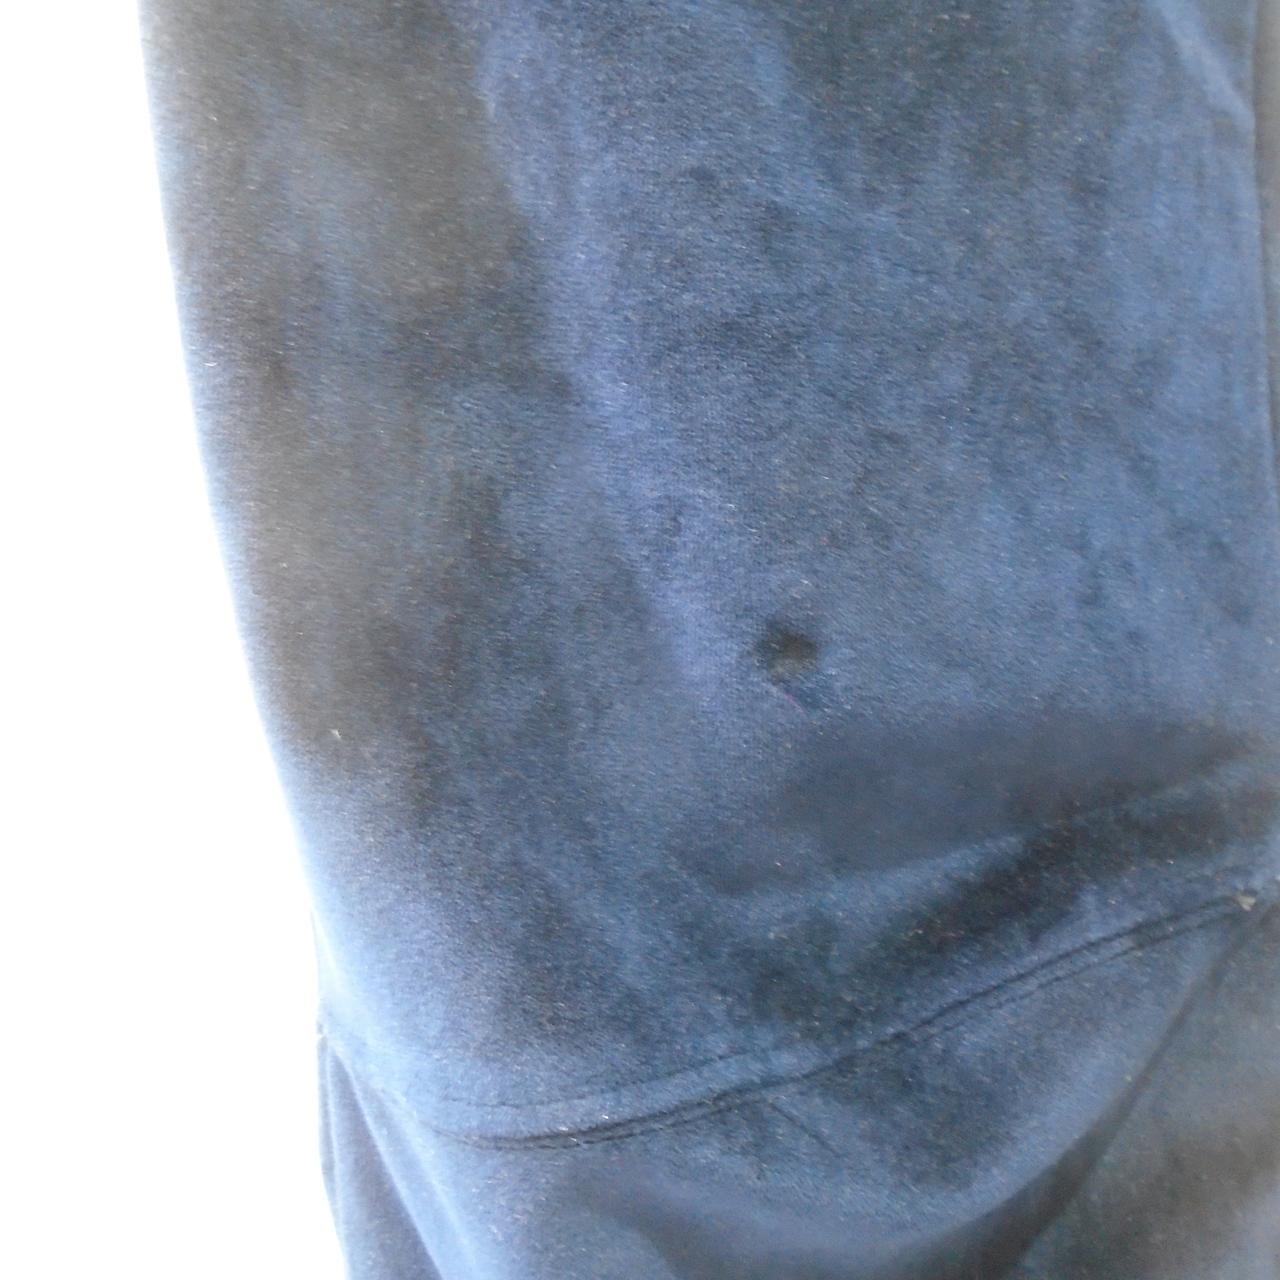 Pantalones de mujer Naketano. Azul oscuro. S. Usado. Satisfactorio